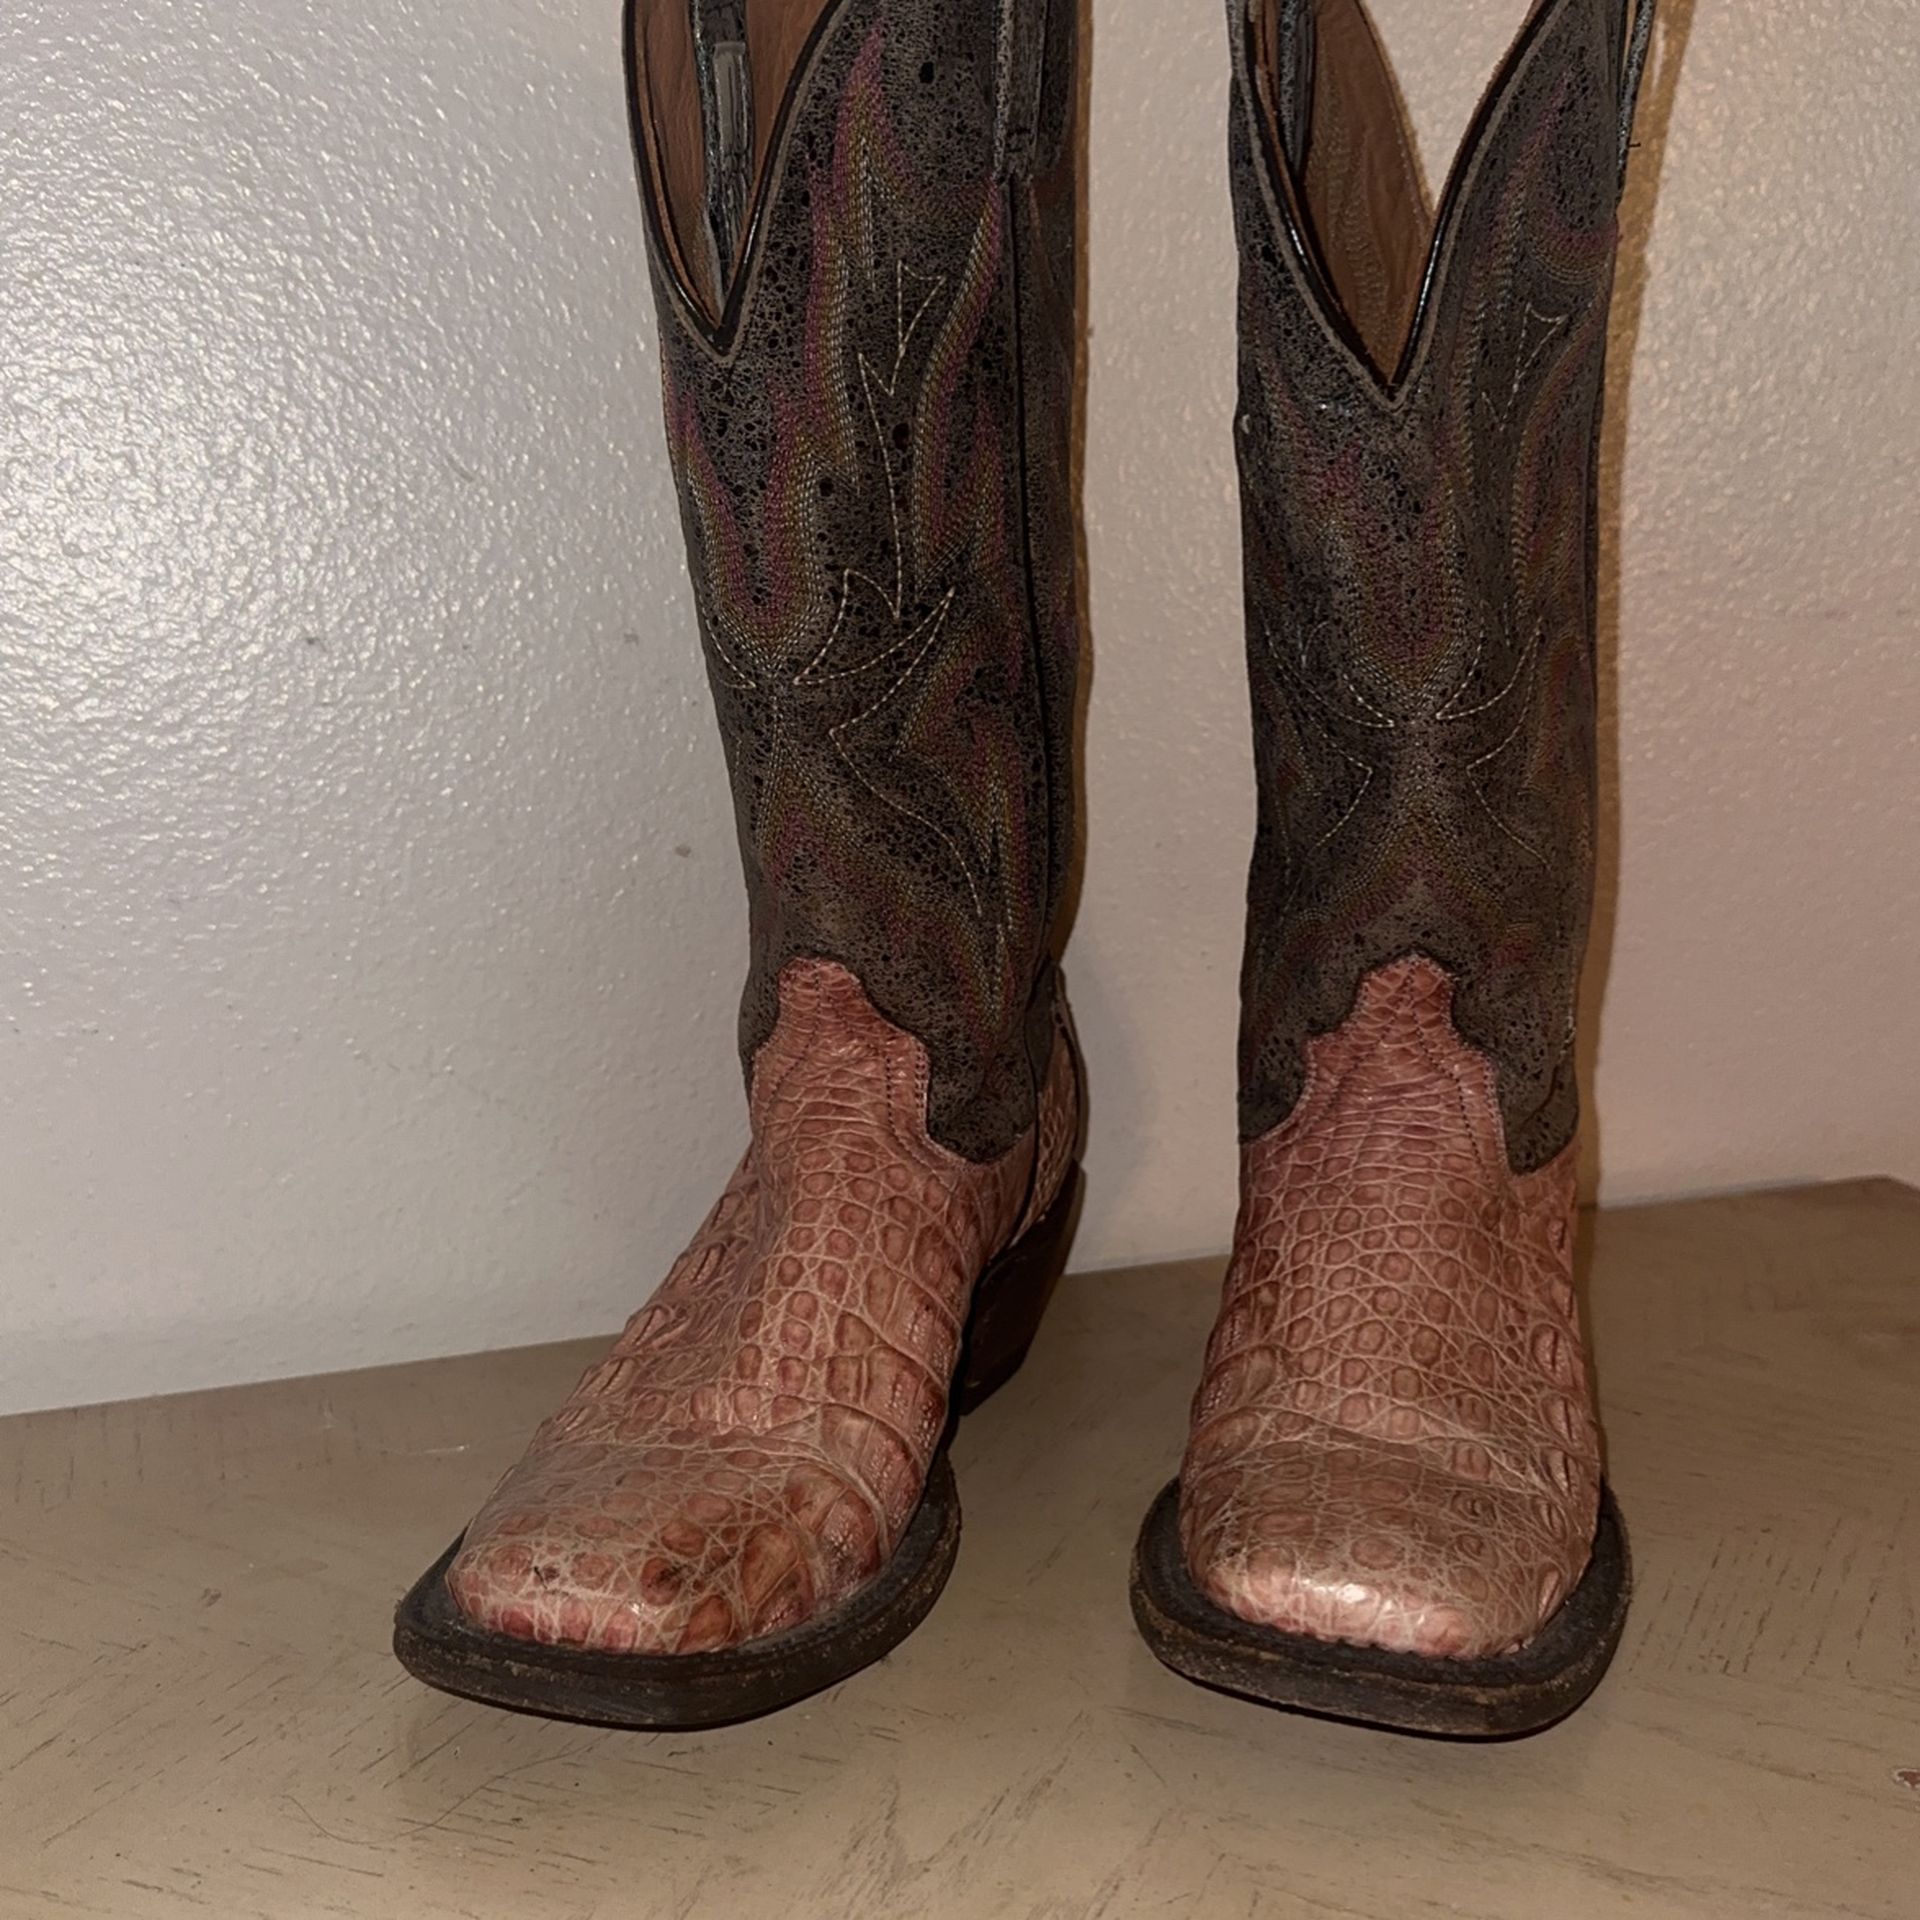 John Stetson Boots, Size 7